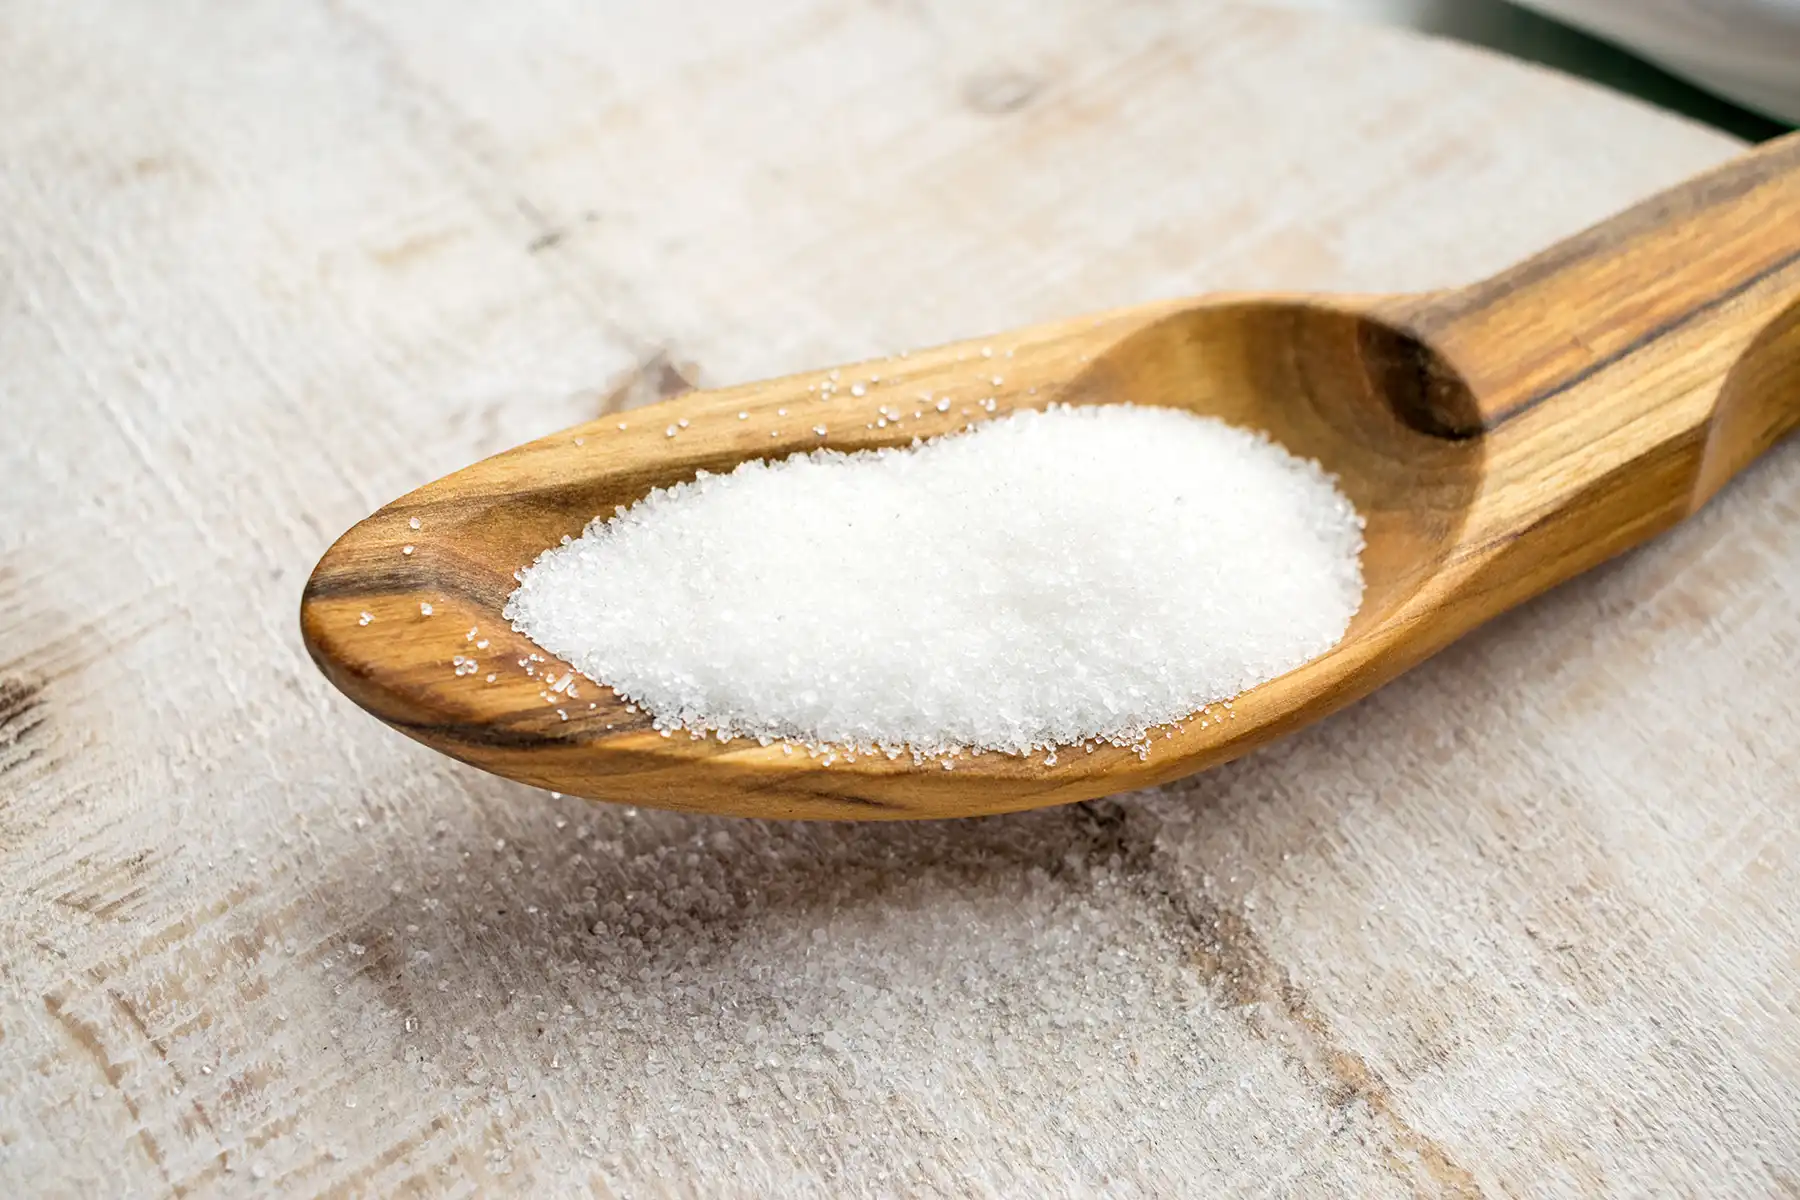 Sugar substitutes - xylitol explained